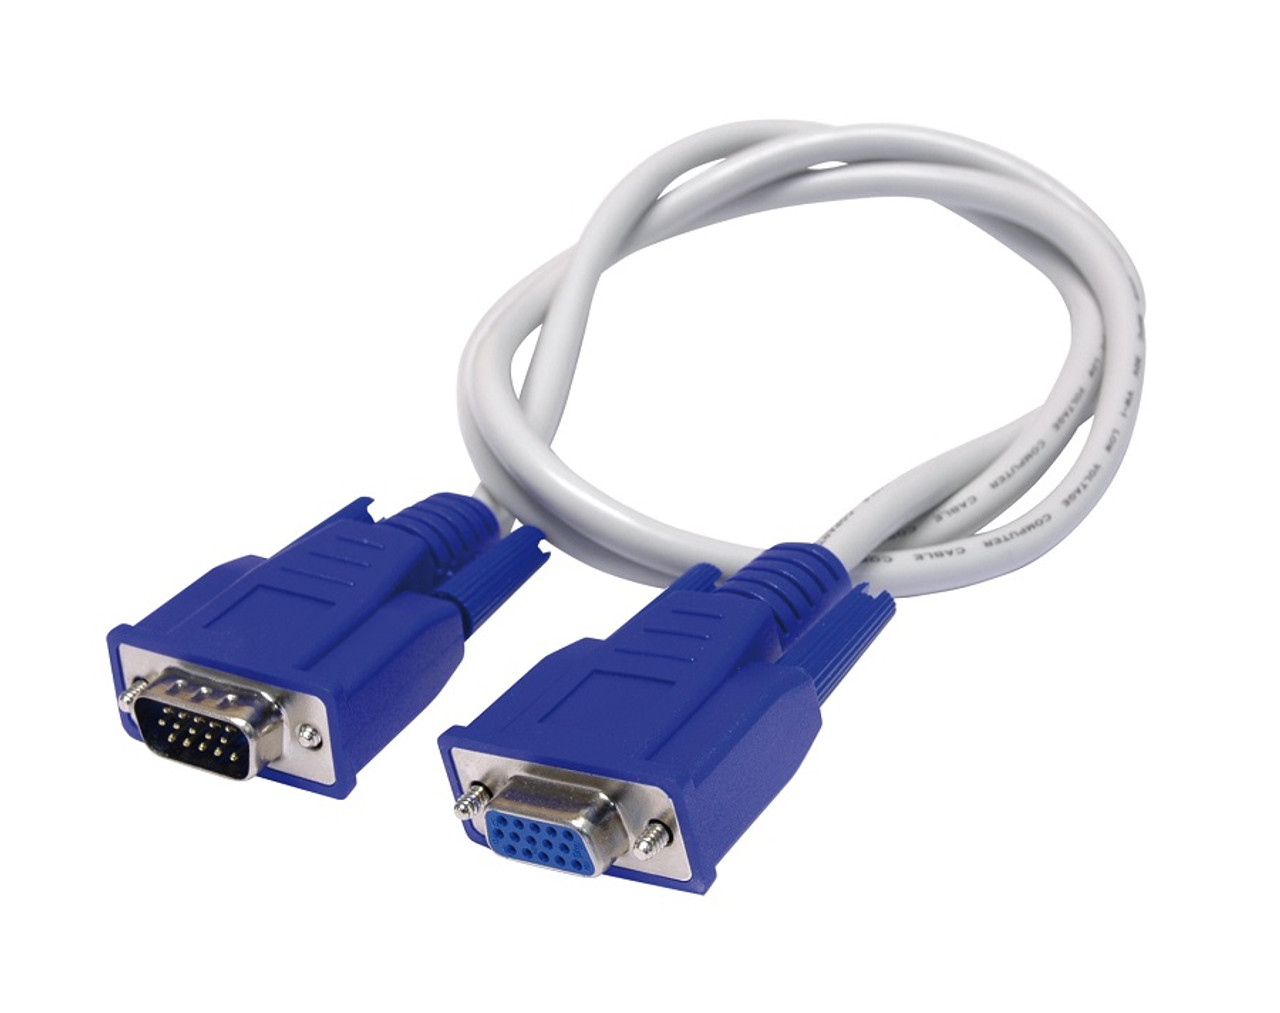 481408-004 - HP DisplayPort Dp to Vga Adapter Cable